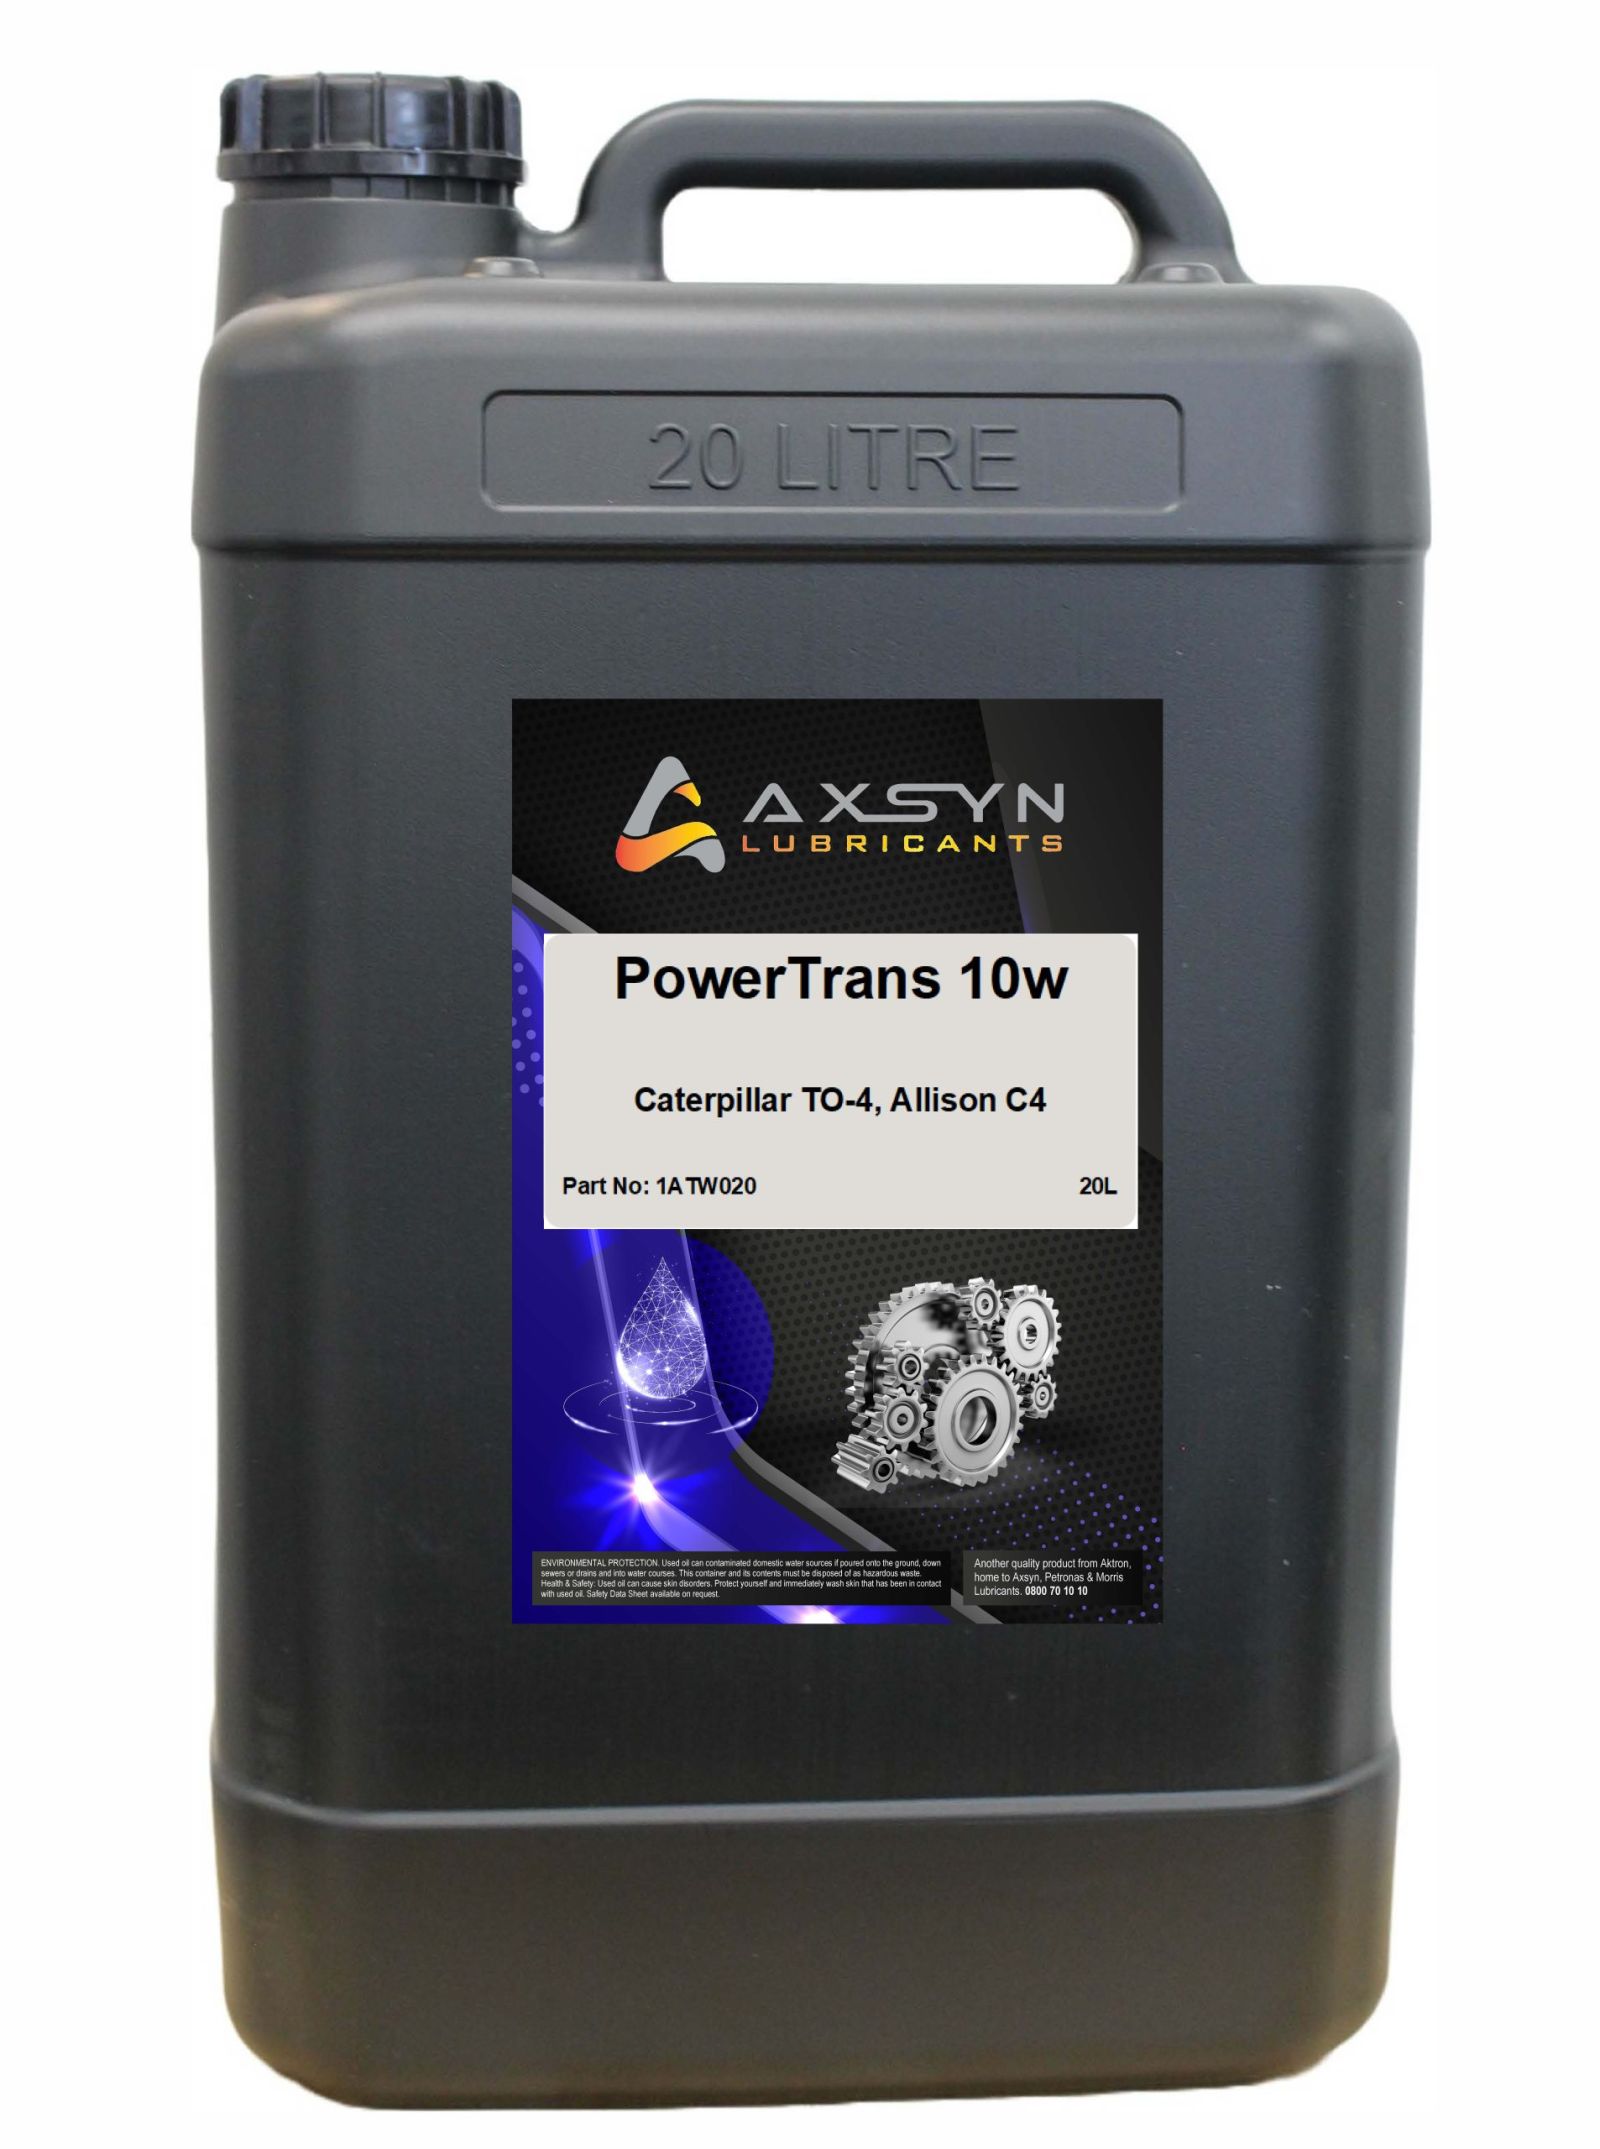 Axsyn PowerTrans 10w